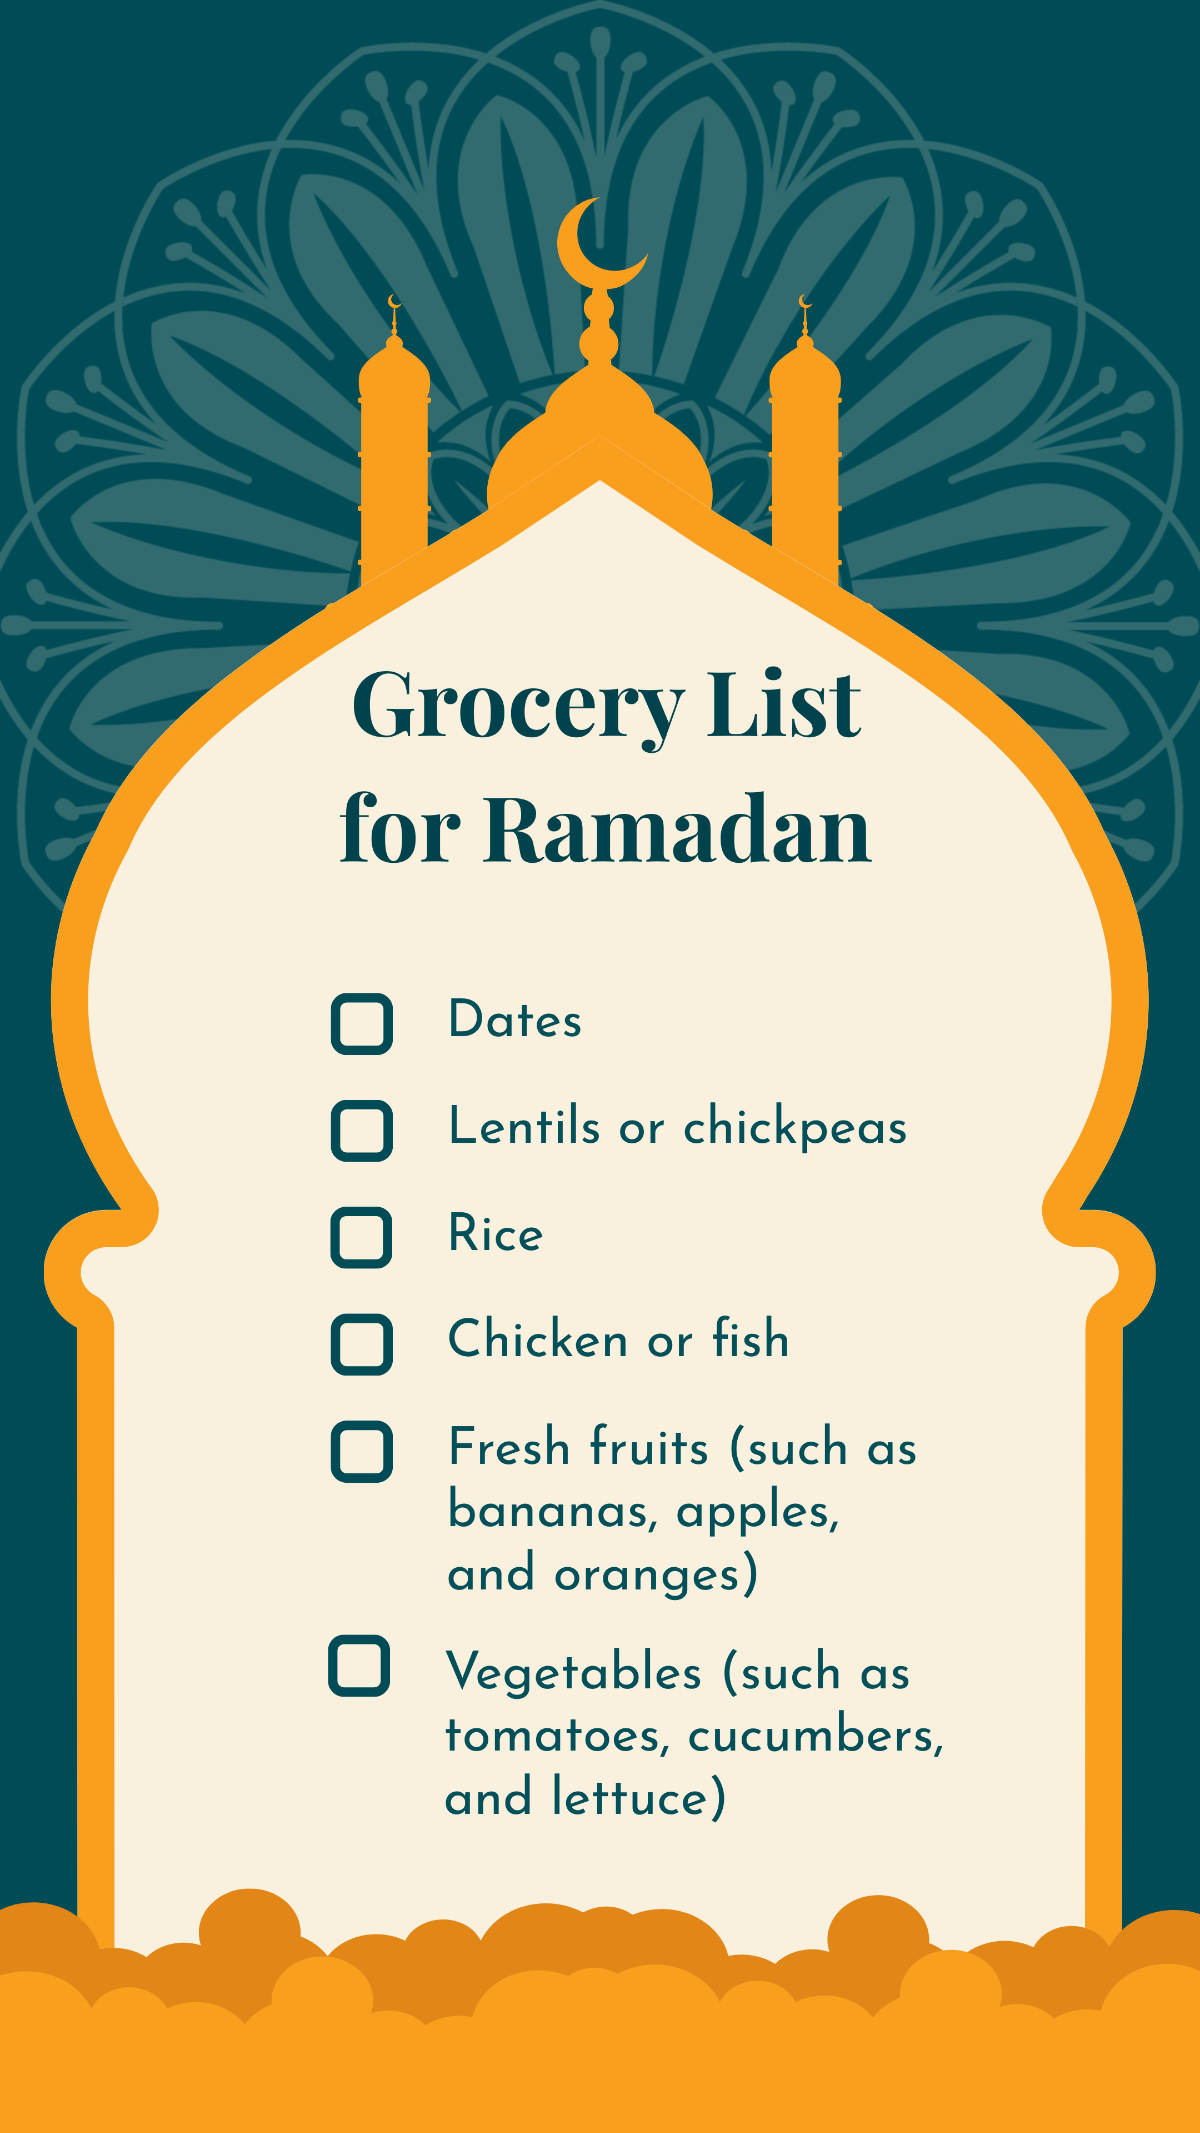 Grocery list for Ramadan